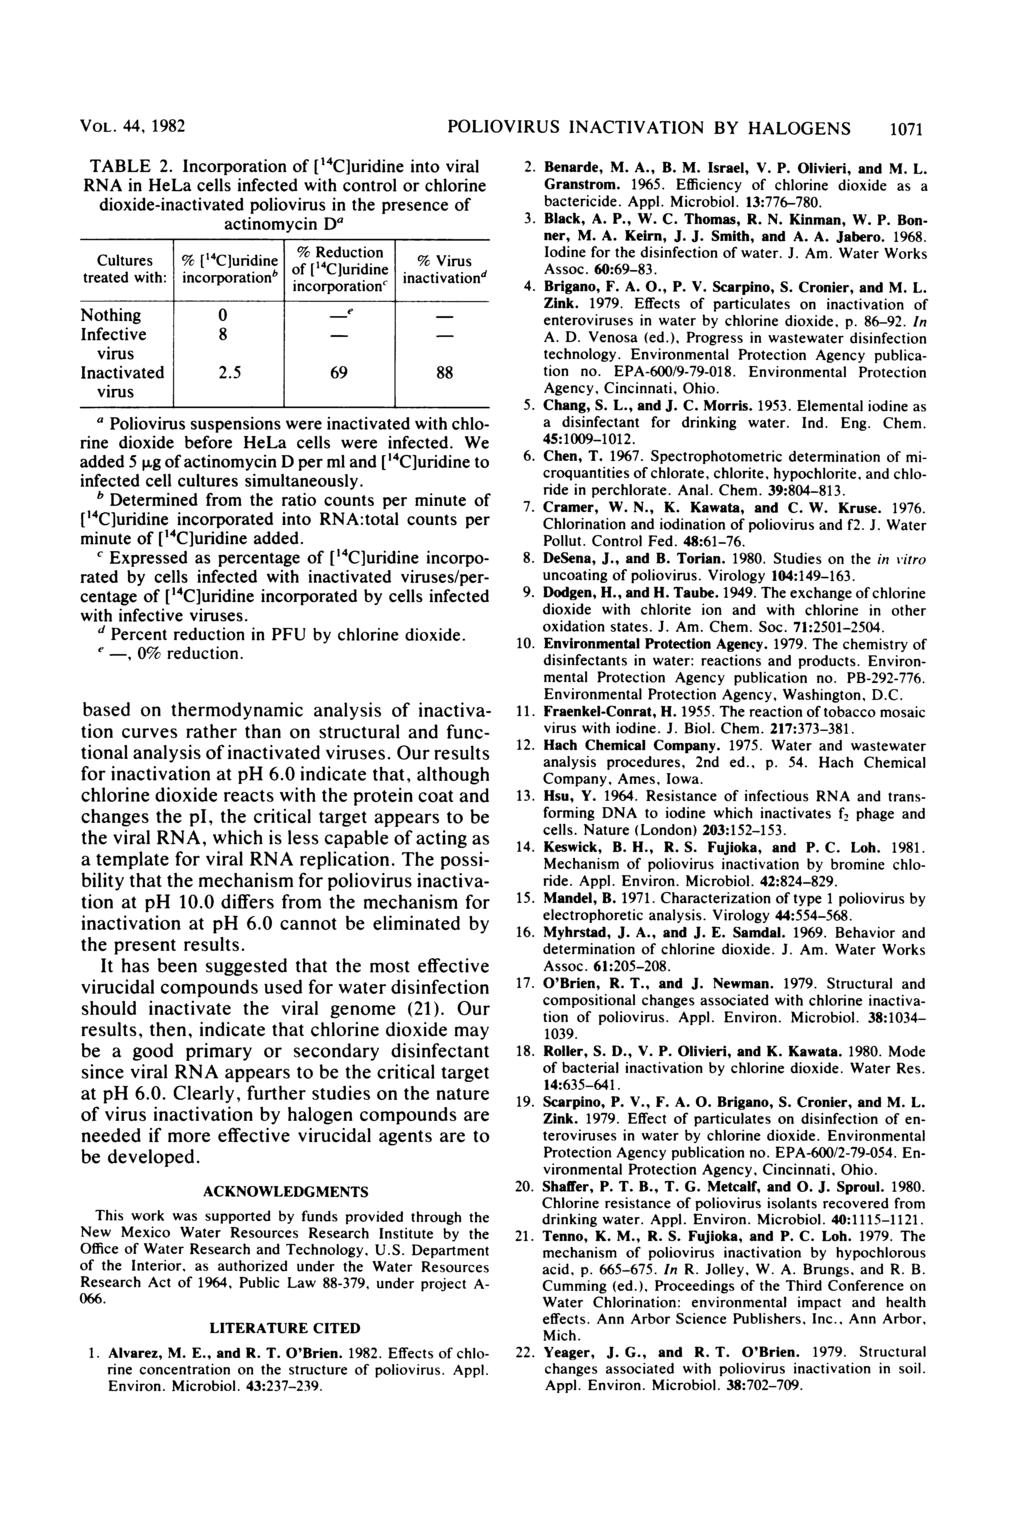 VOL. 44, 1982 TABLE 2.